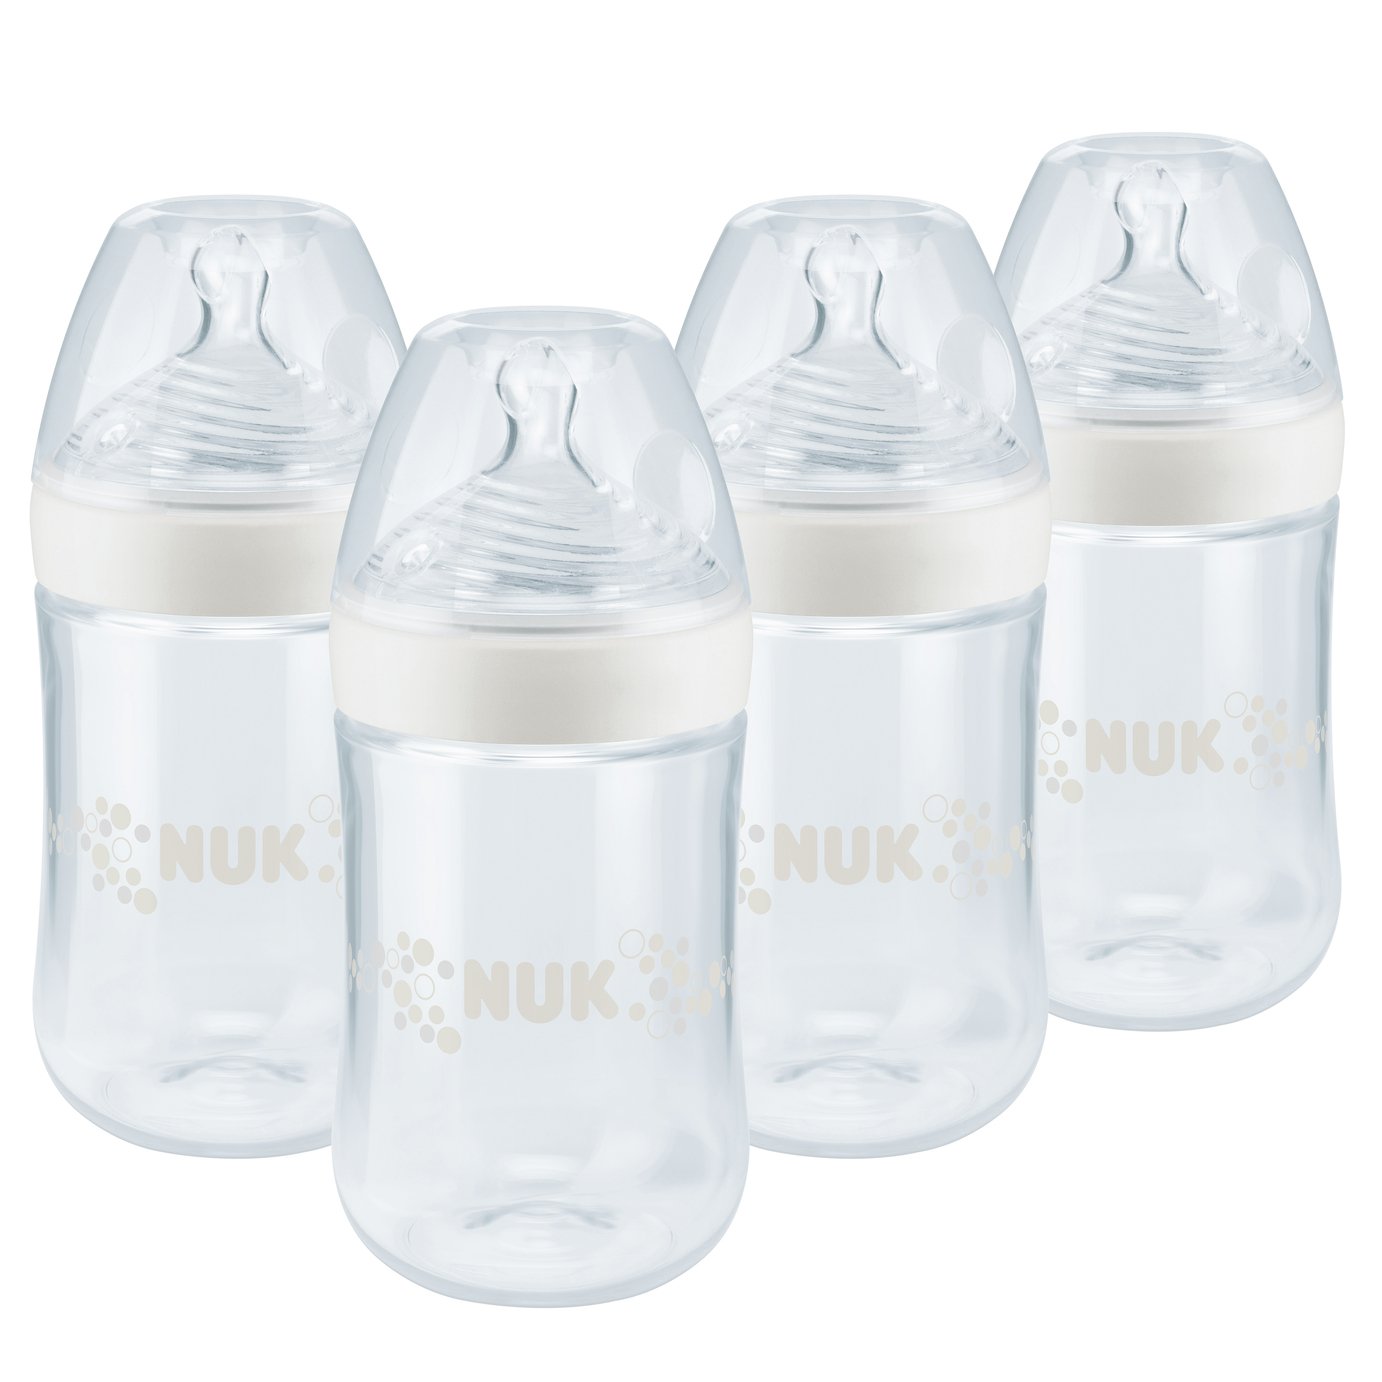 NUK Nature Sense 260ml Bottles - 4 Pack